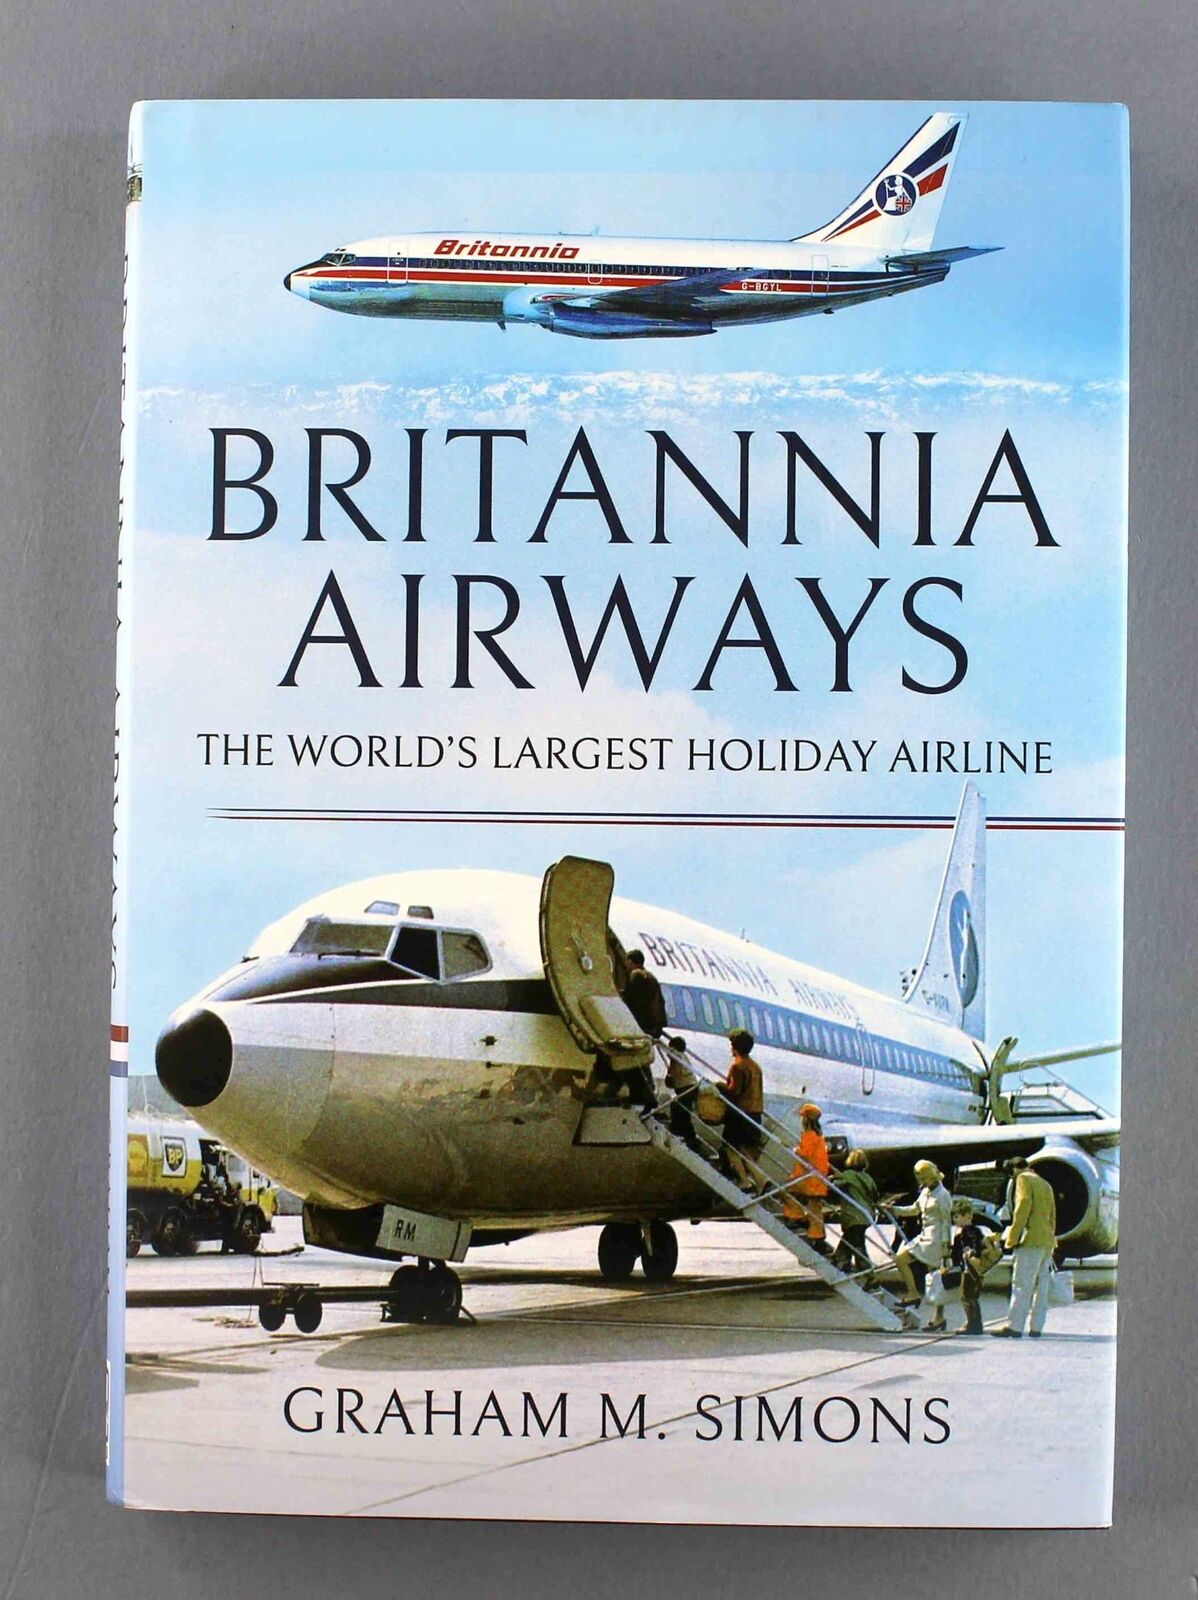 BRITANNIA AIRWAYS AIRLINE BOOK EURAVIA SKYWAYS BOEING THOMSON HOLIDAYS SKY TOURS